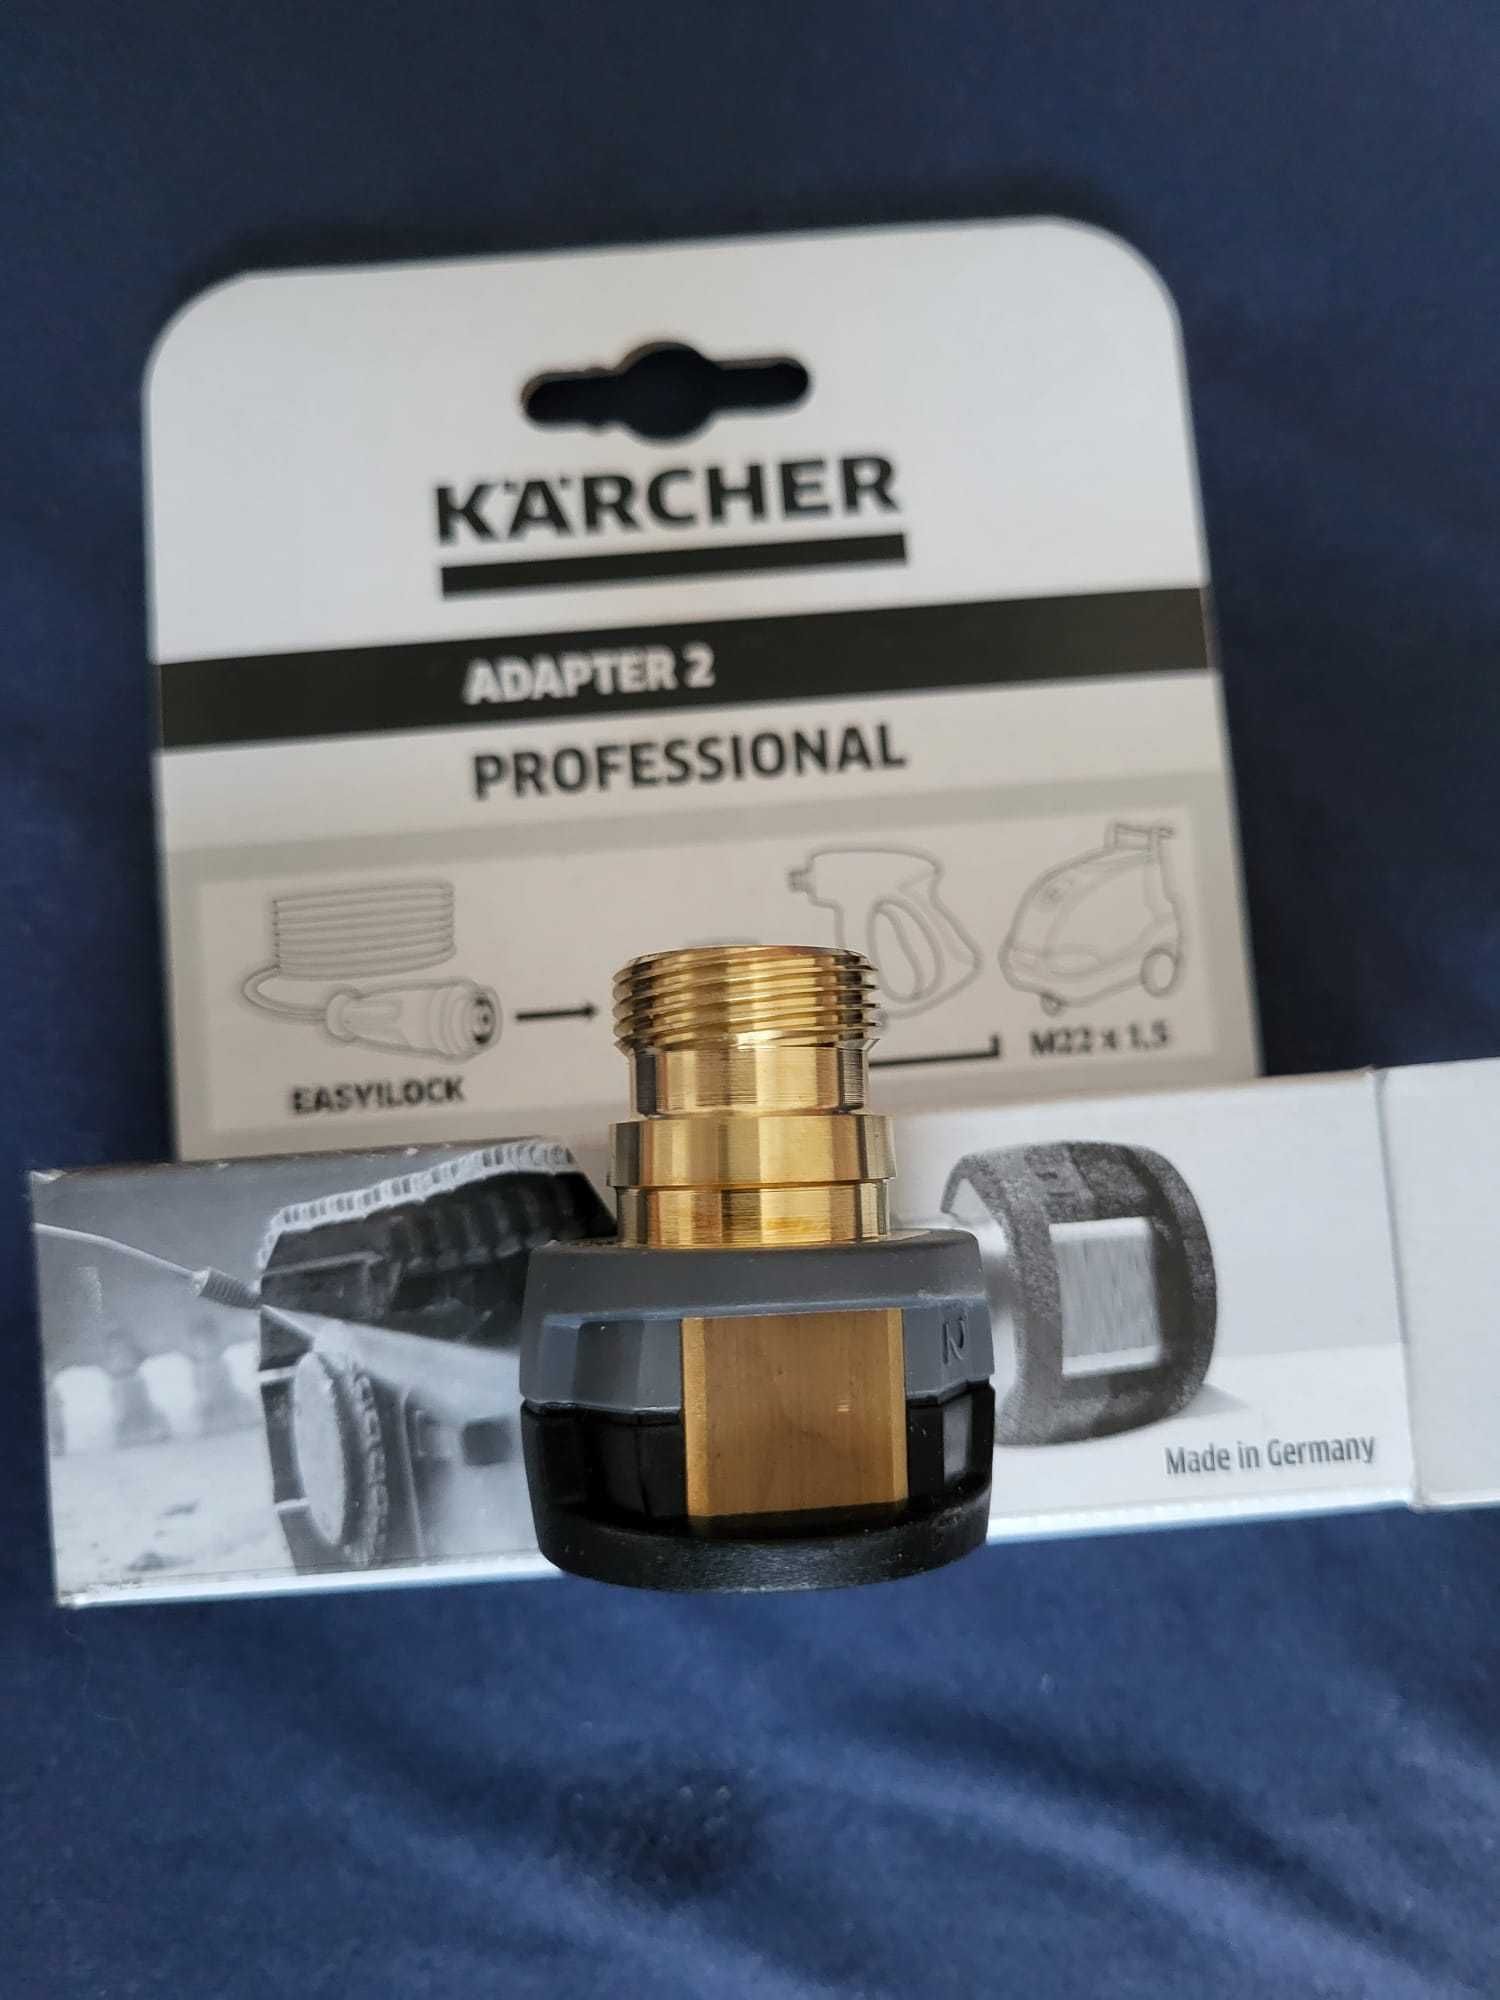 Adaptorul 2 Karcher conectare aparat vechi profesional la furtun nou